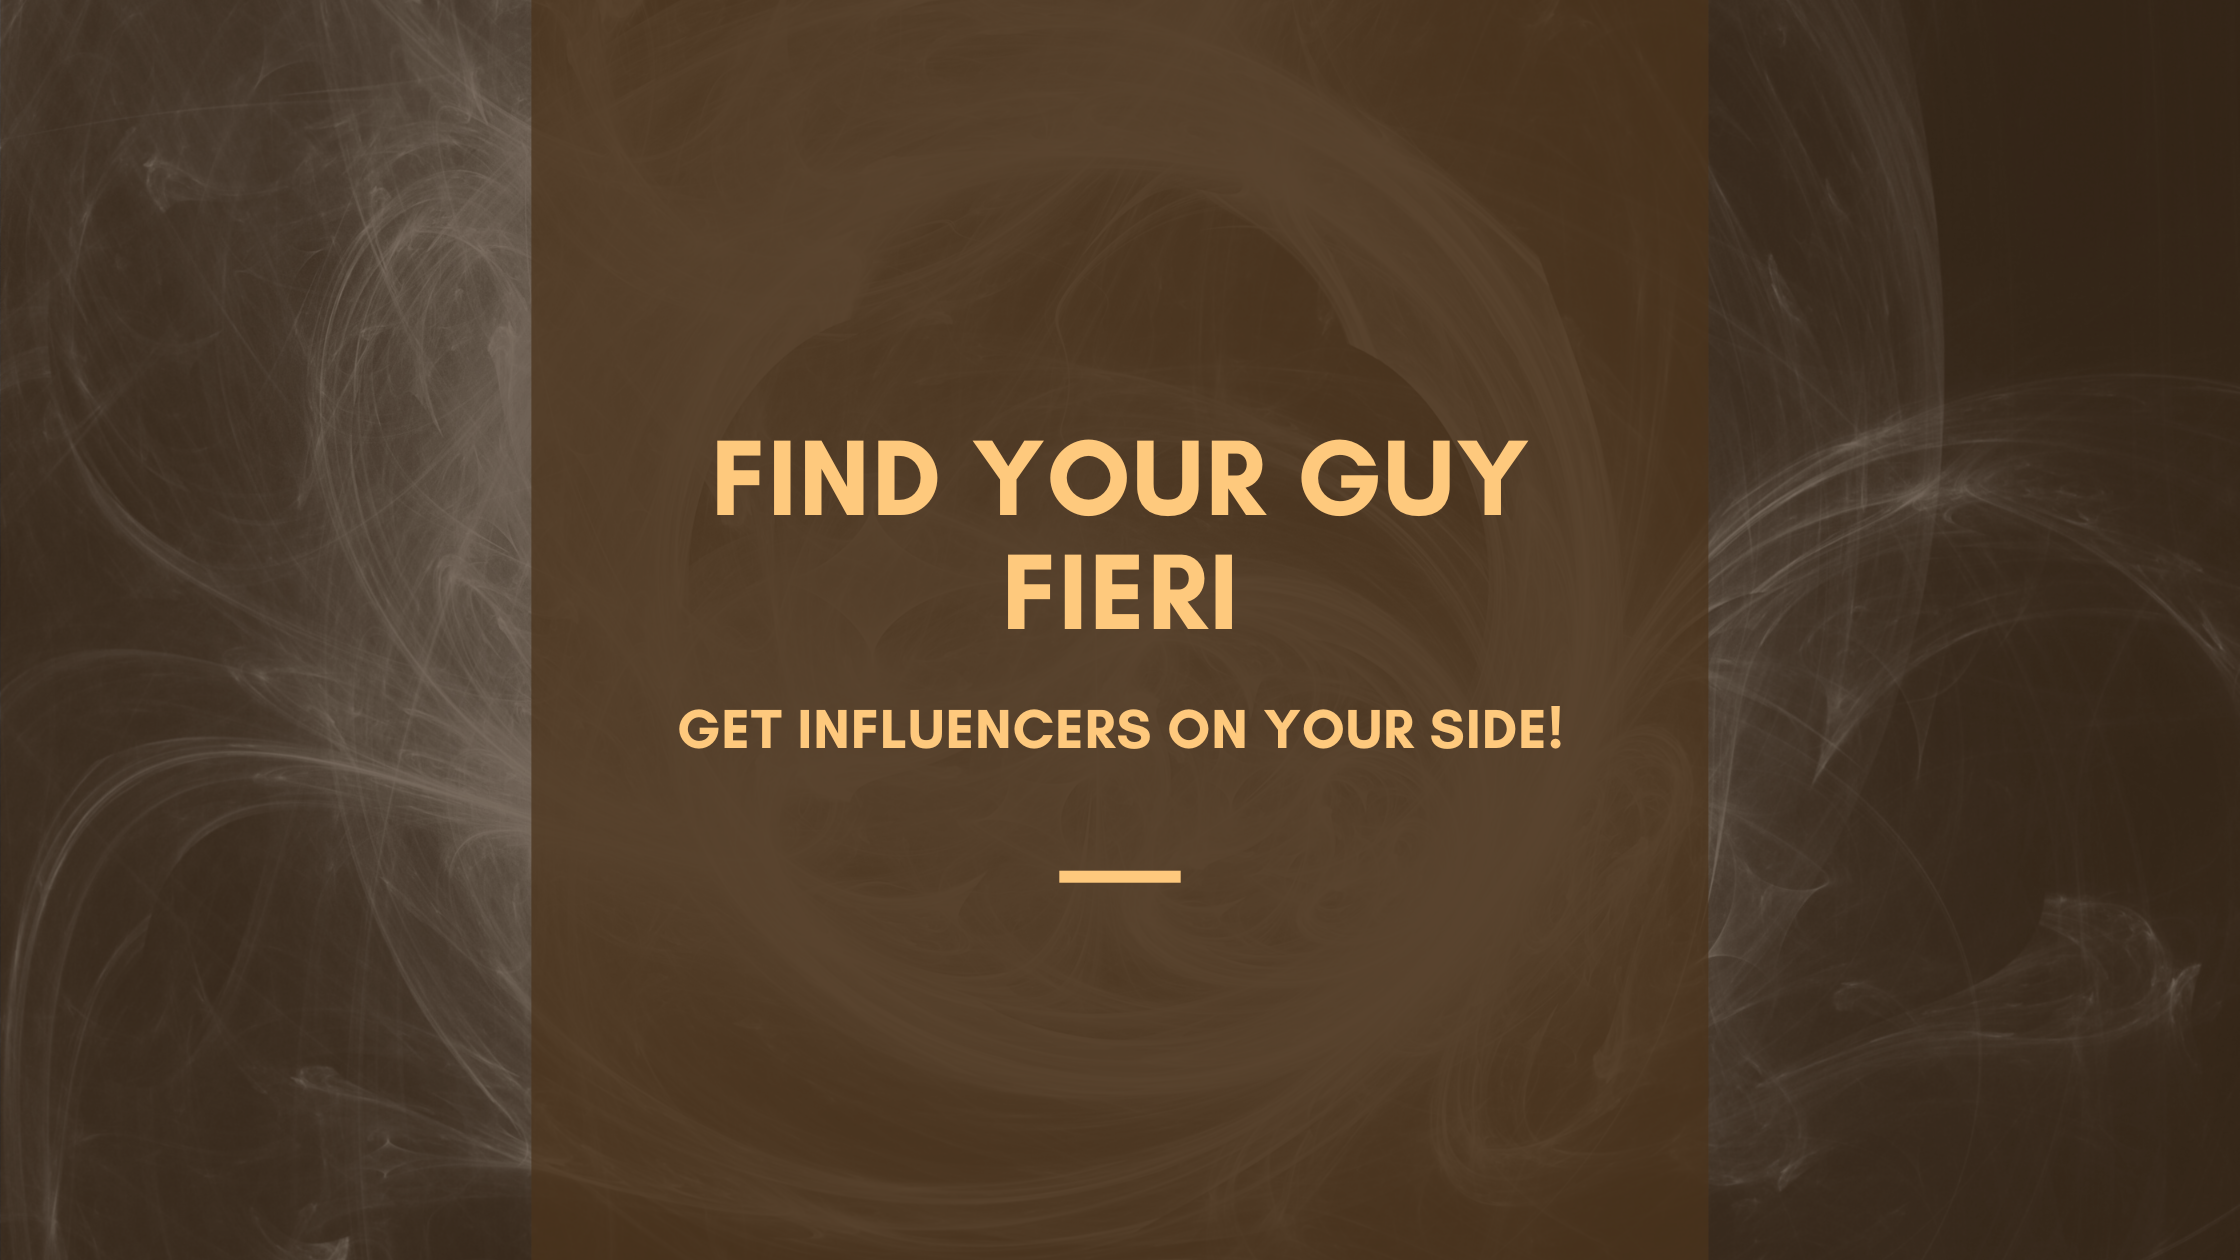 Find Your Guy Fieri